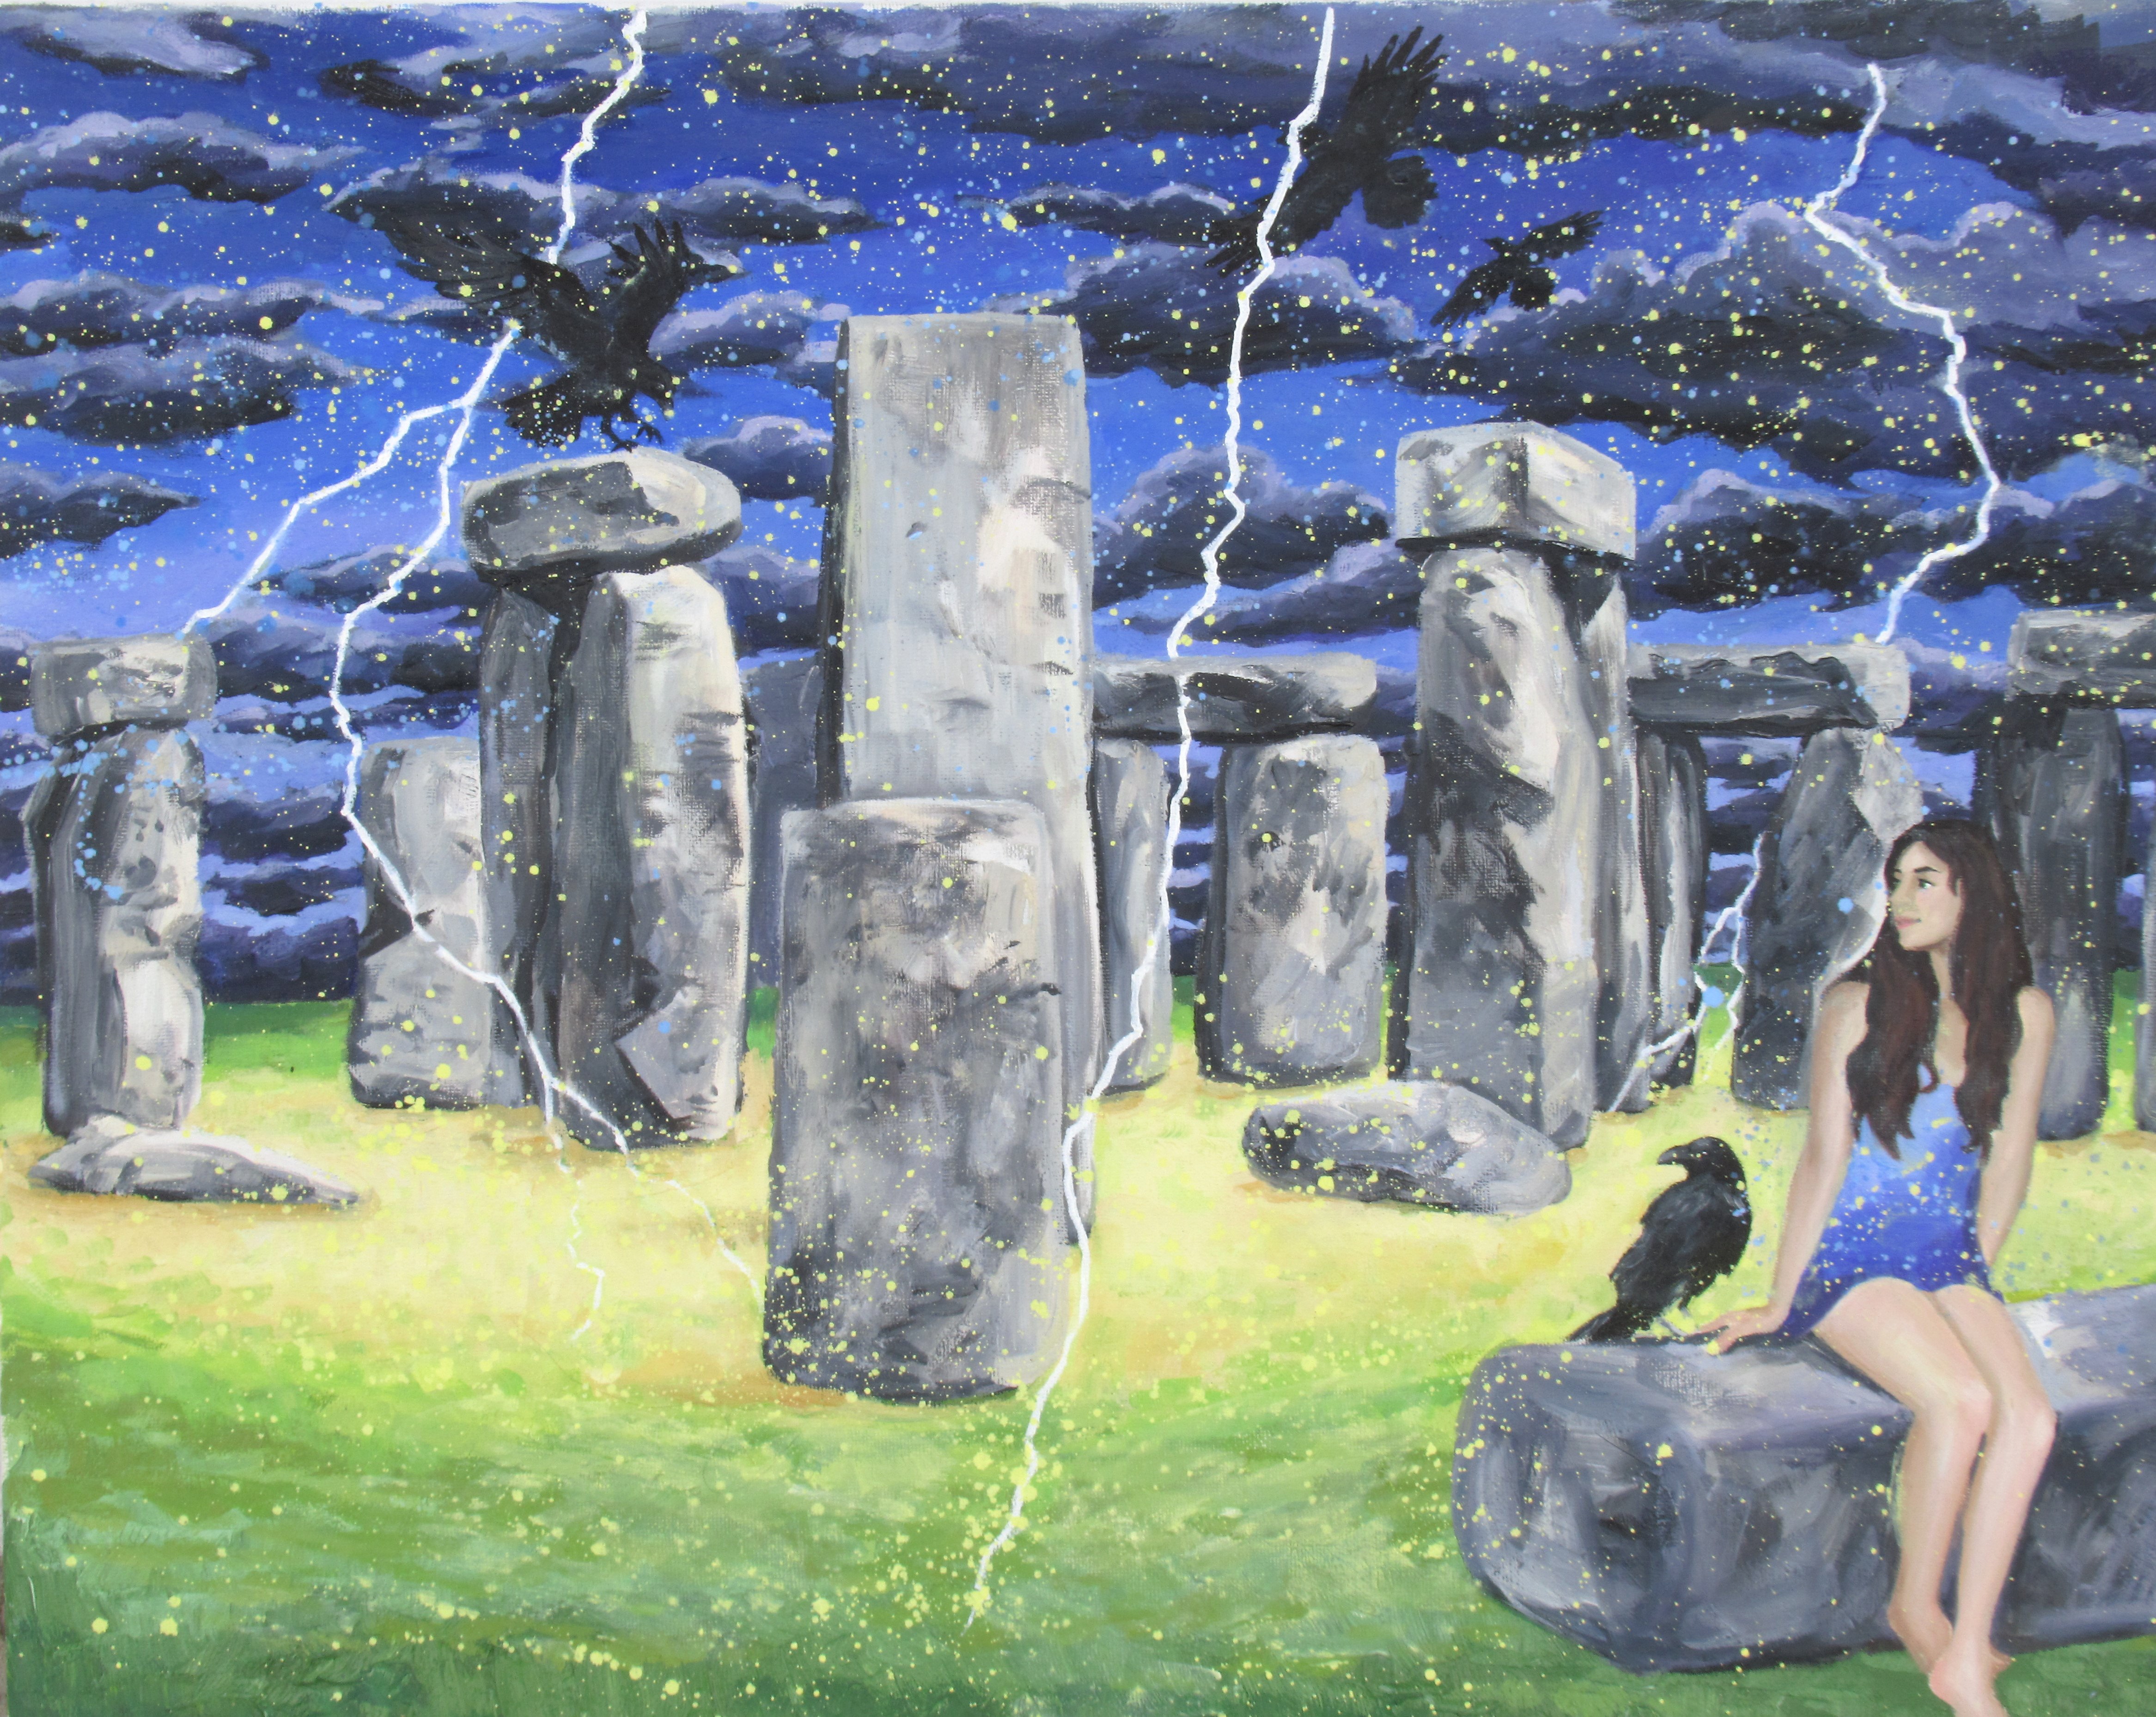 Magic Storm, oil on canvas, 16x24 in, Jessica Siemens 2022